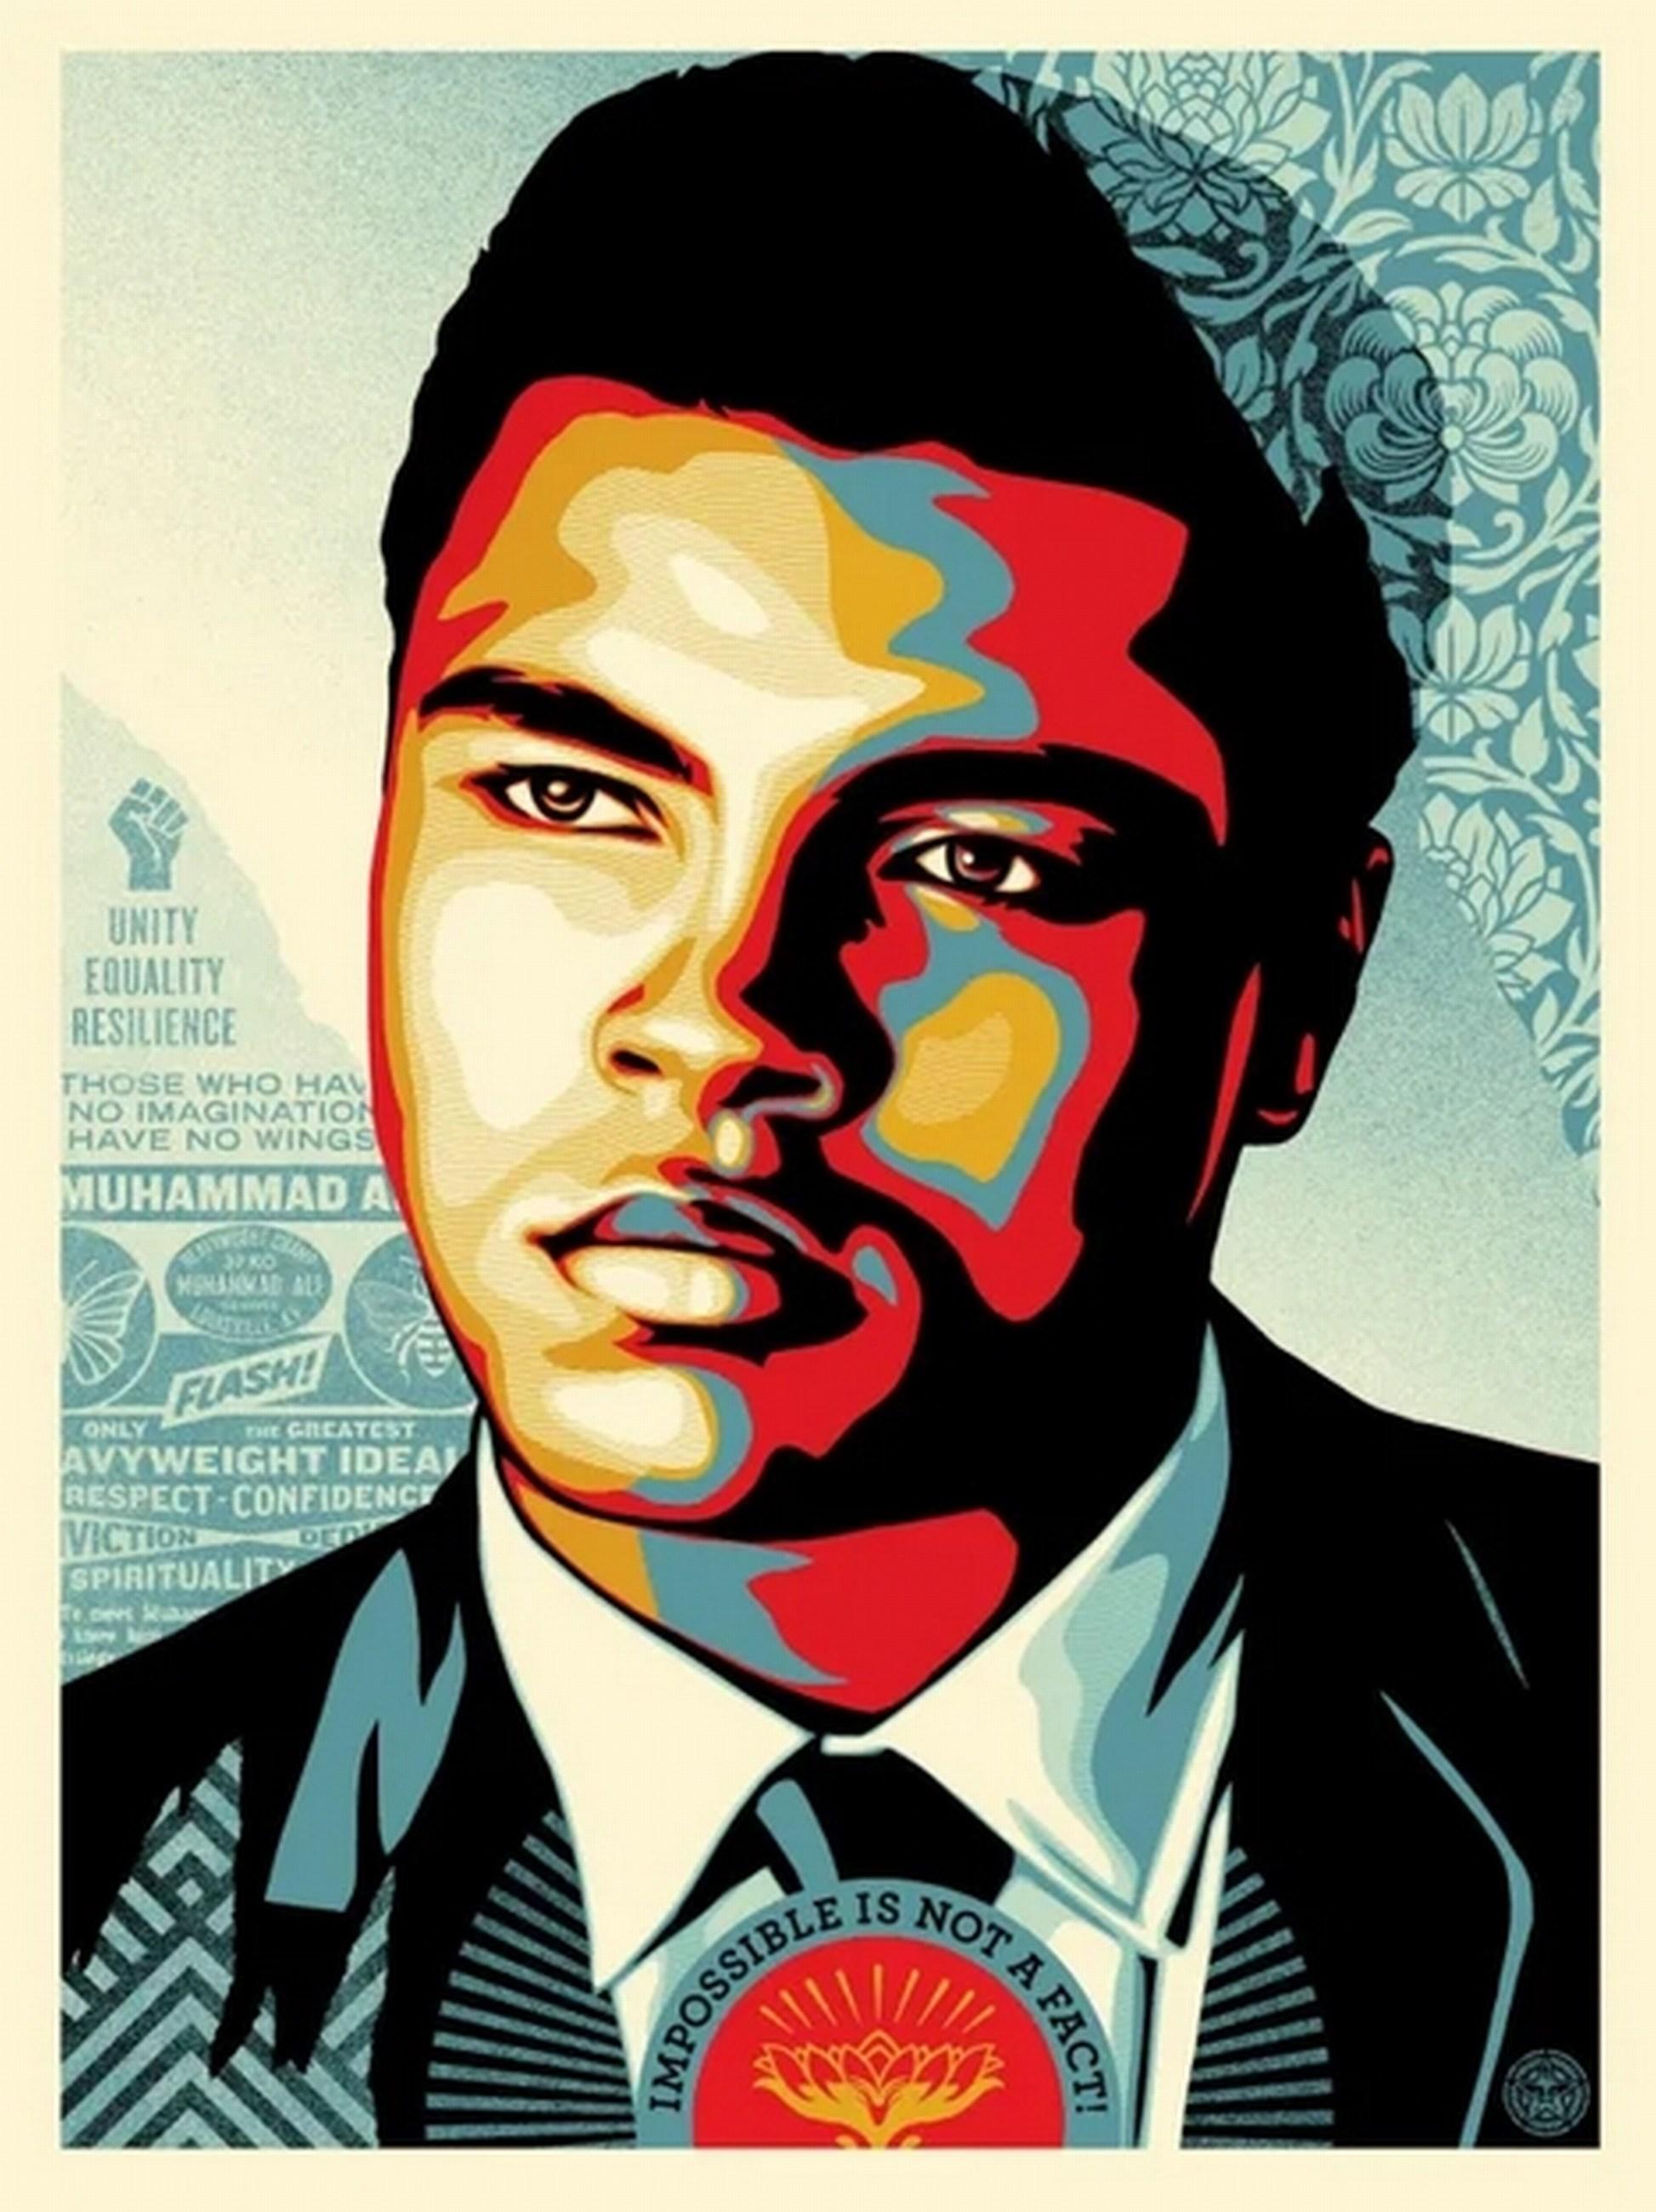 Shepard Fairey Portrait Print - Muhammad Ali – Heavyweight Ideals (Iconic, Activist, Civil Rights, ~35% OFF)